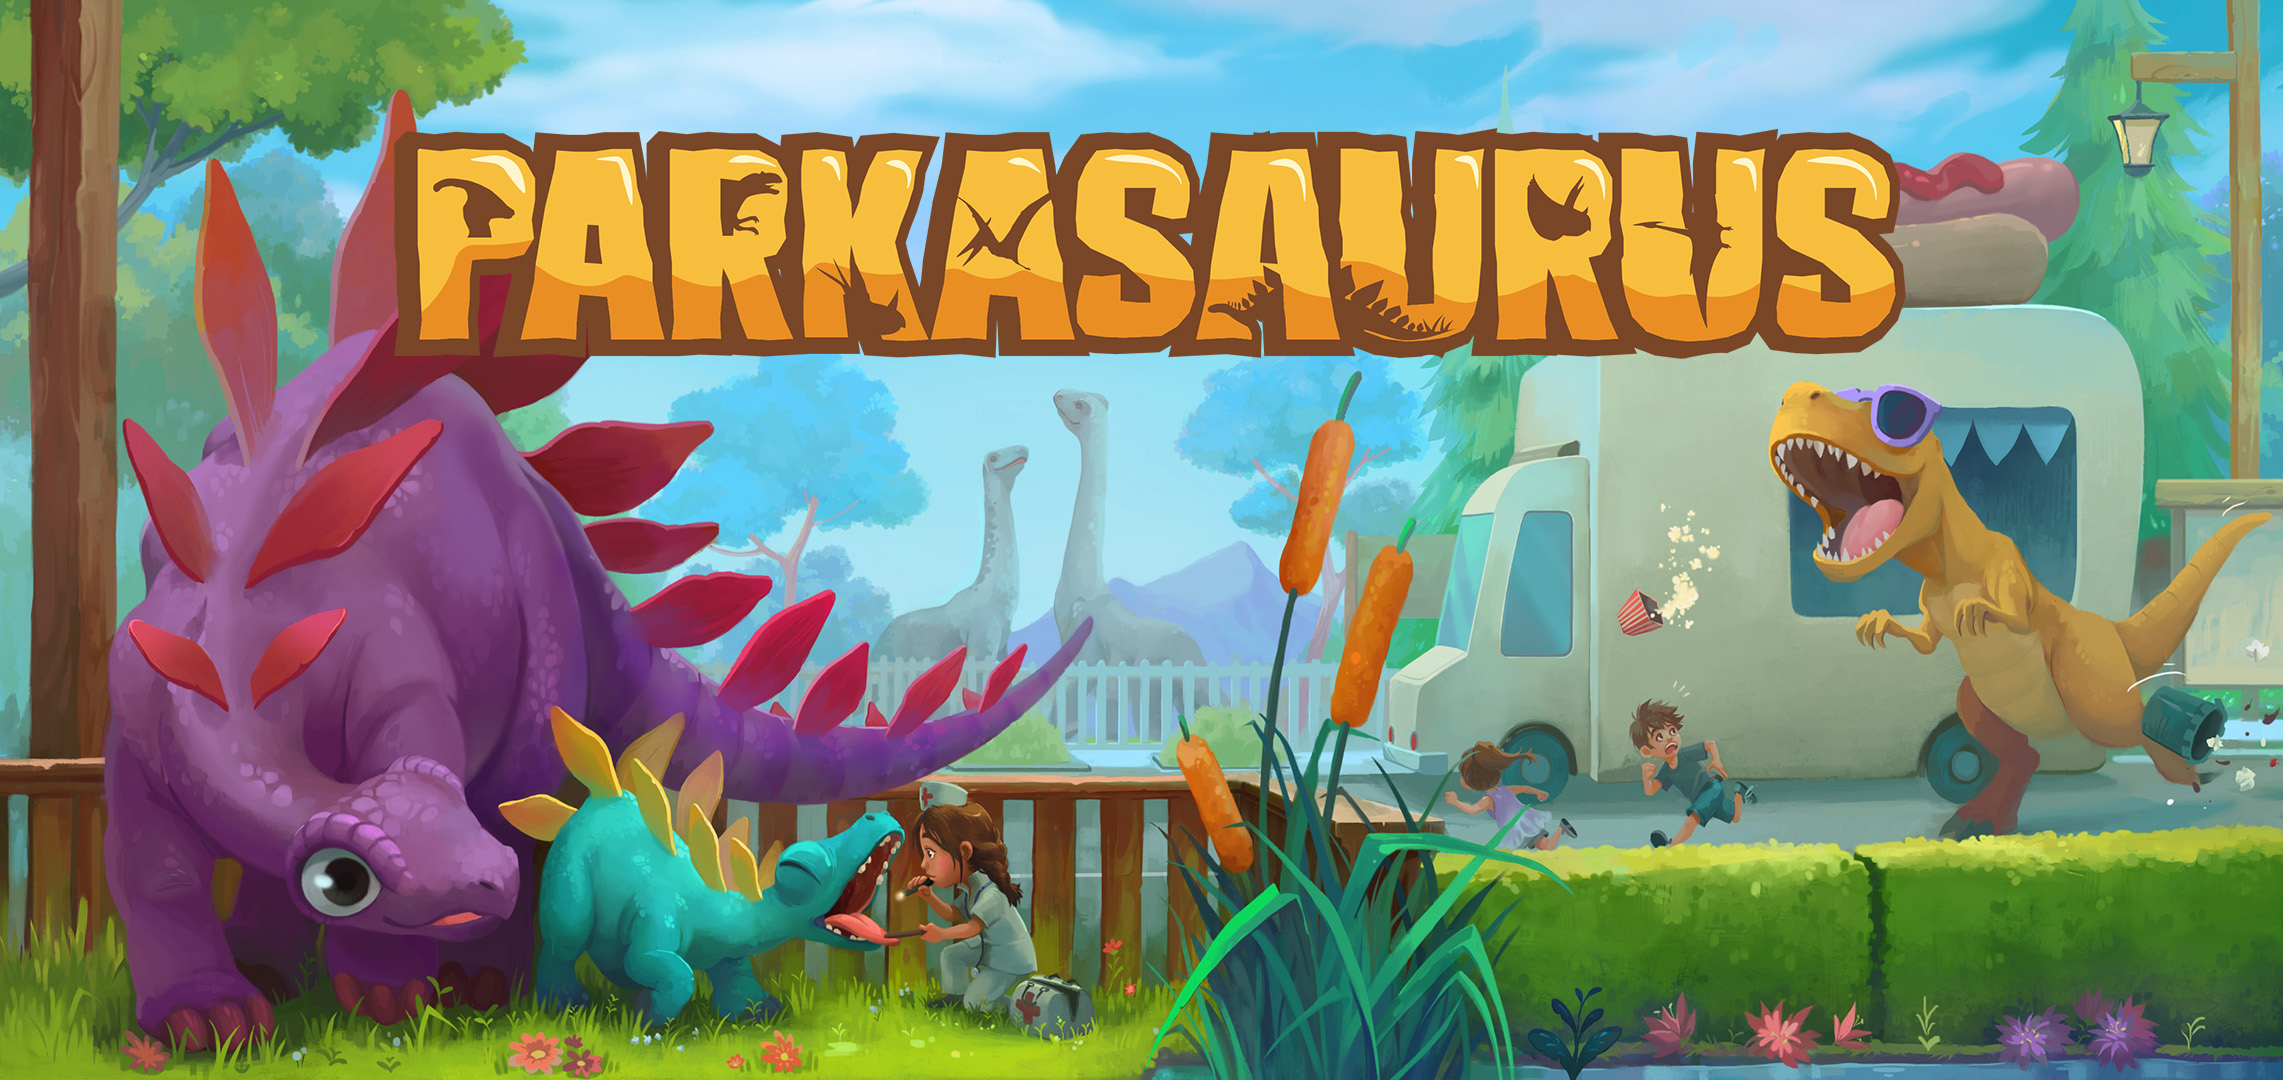 Parkasaurus video game